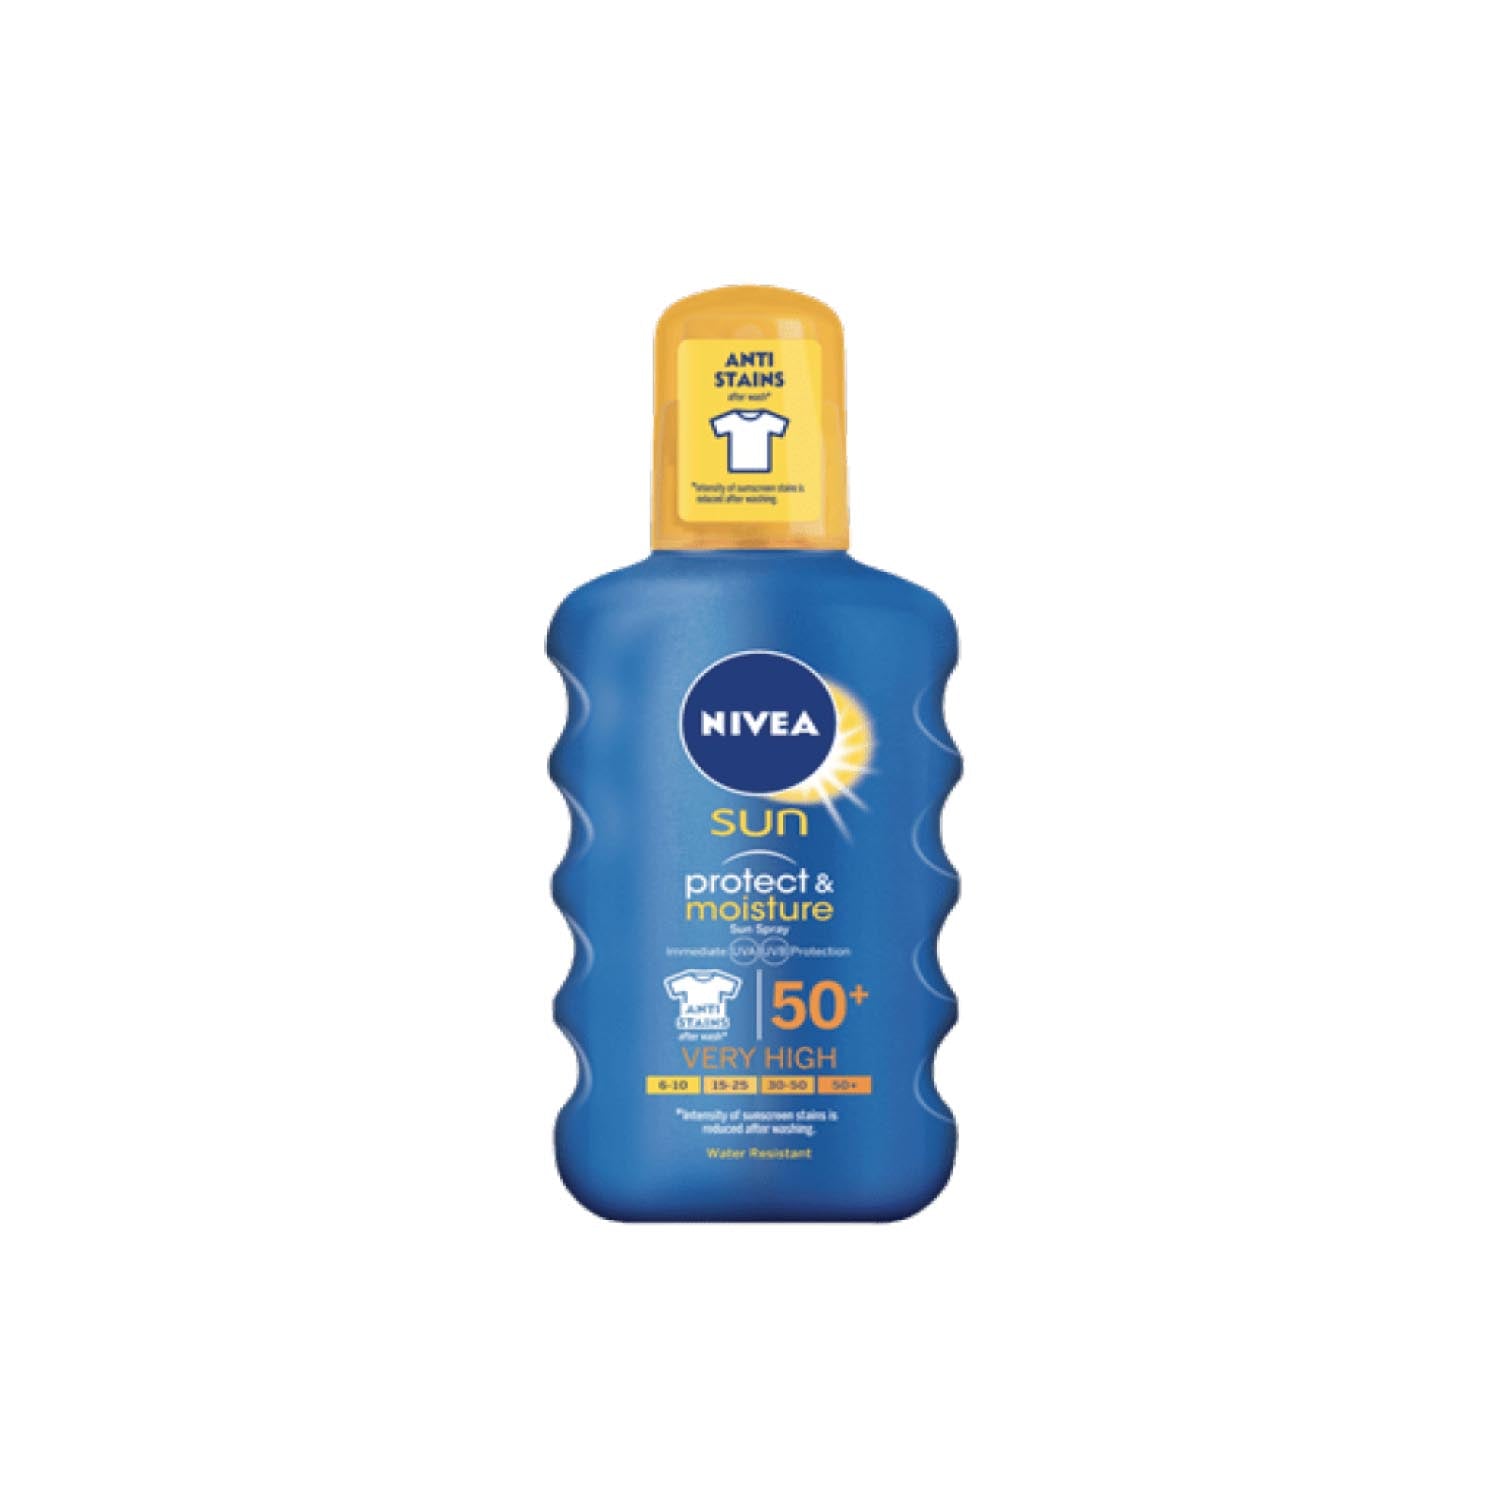 Nivea Sun Protect & Moisture  SPF50+ Spray, 200ml